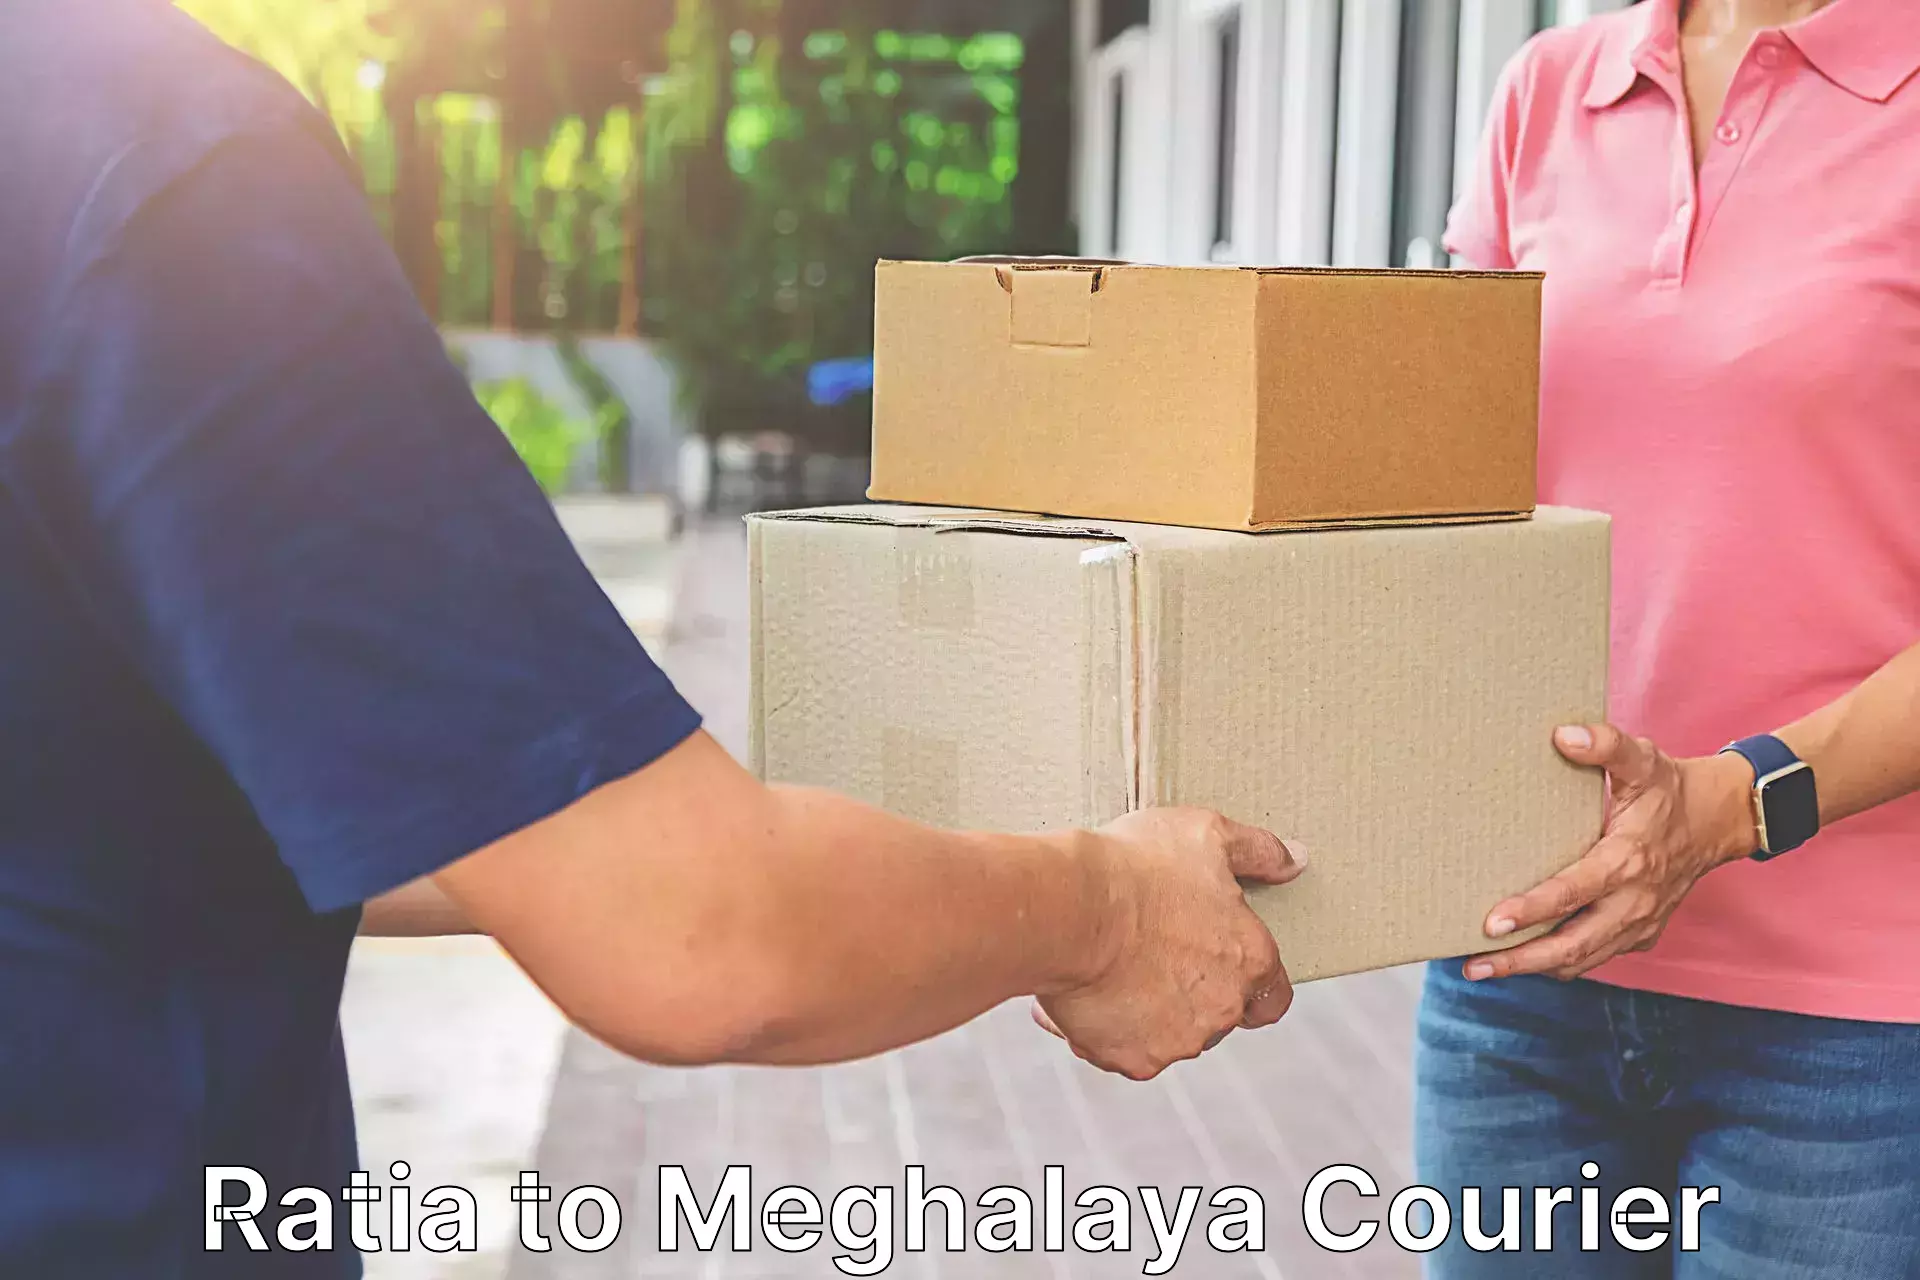 Easy return solutions Ratia to Meghalaya